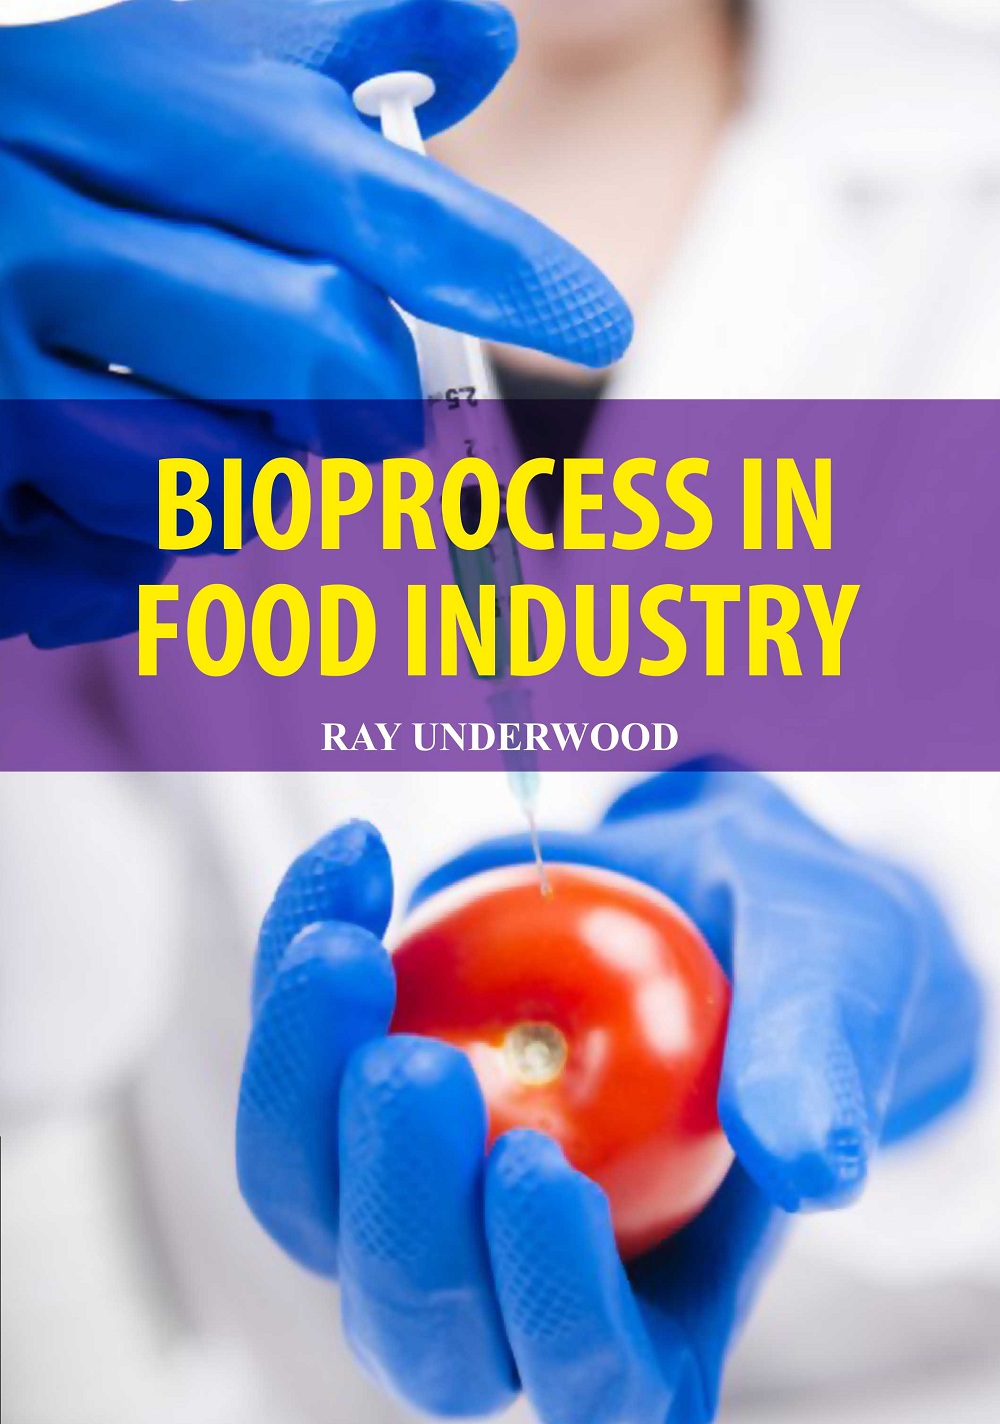 Bioprocesses in Food Industry